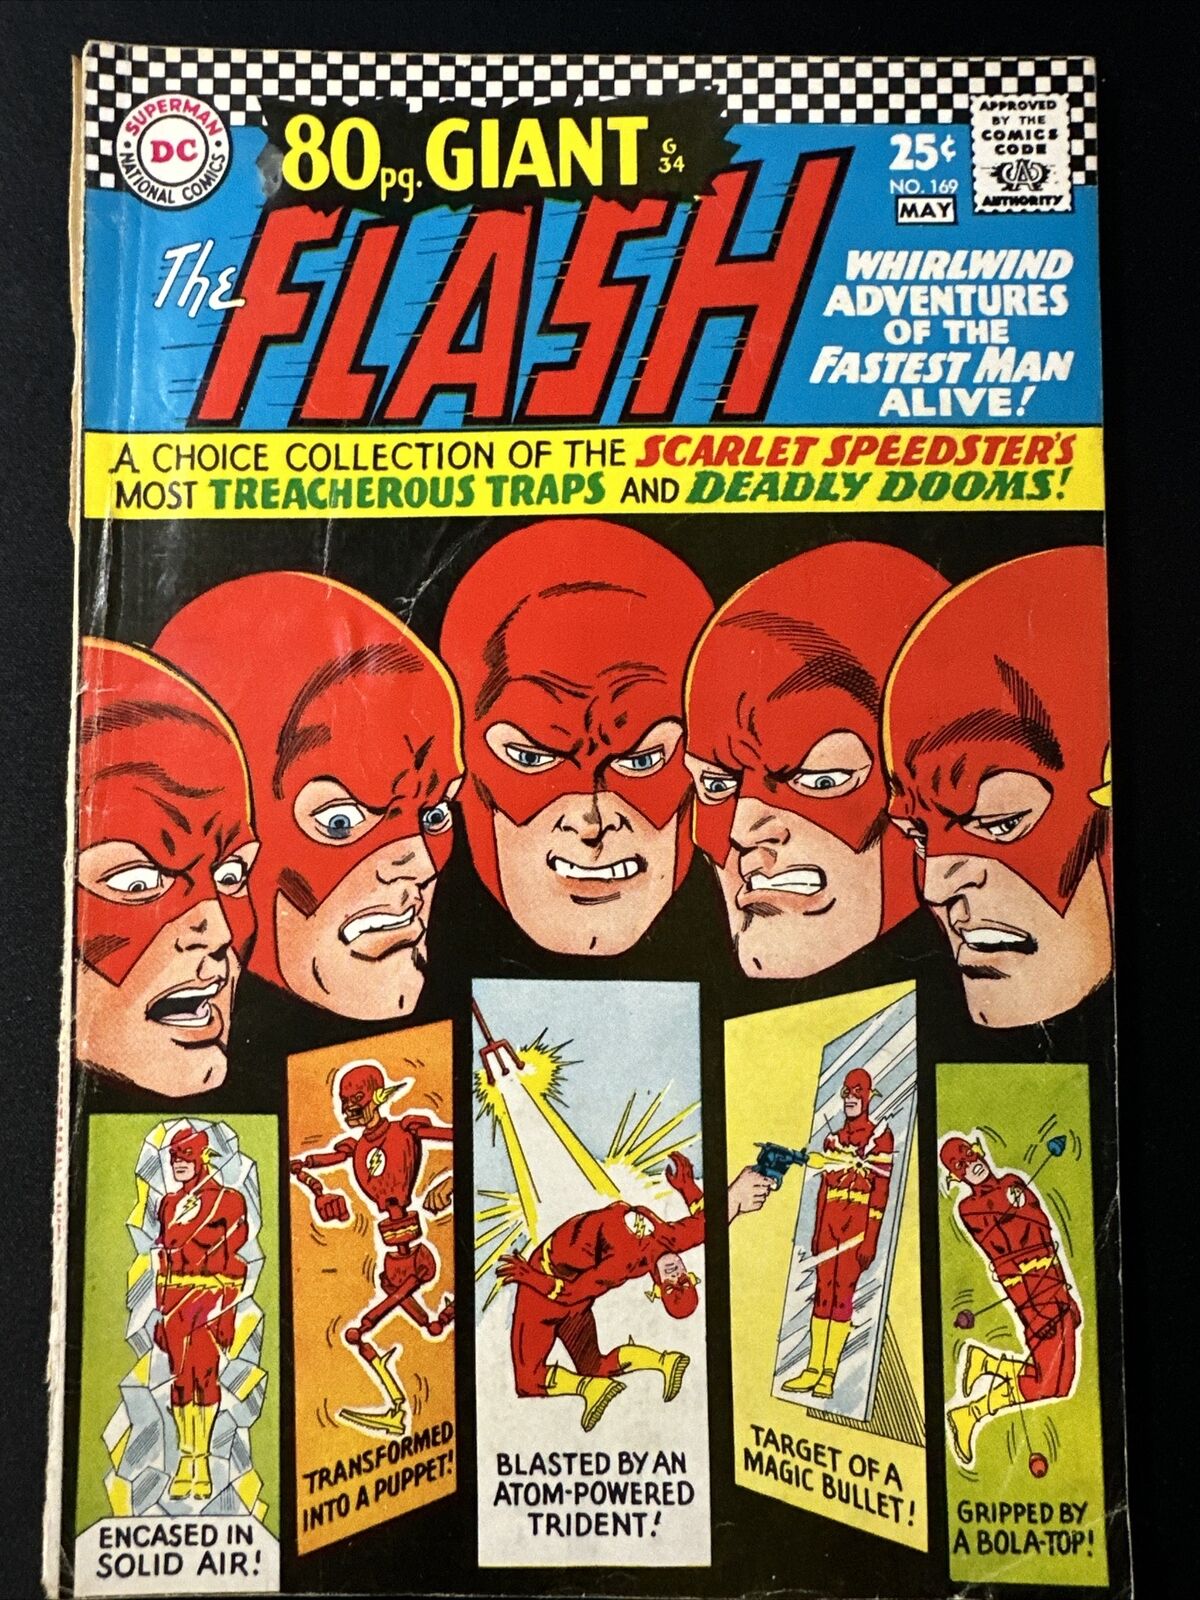 The Flash #169 DC Comics Vintage Silver age 1st Print 1969 Good *A3